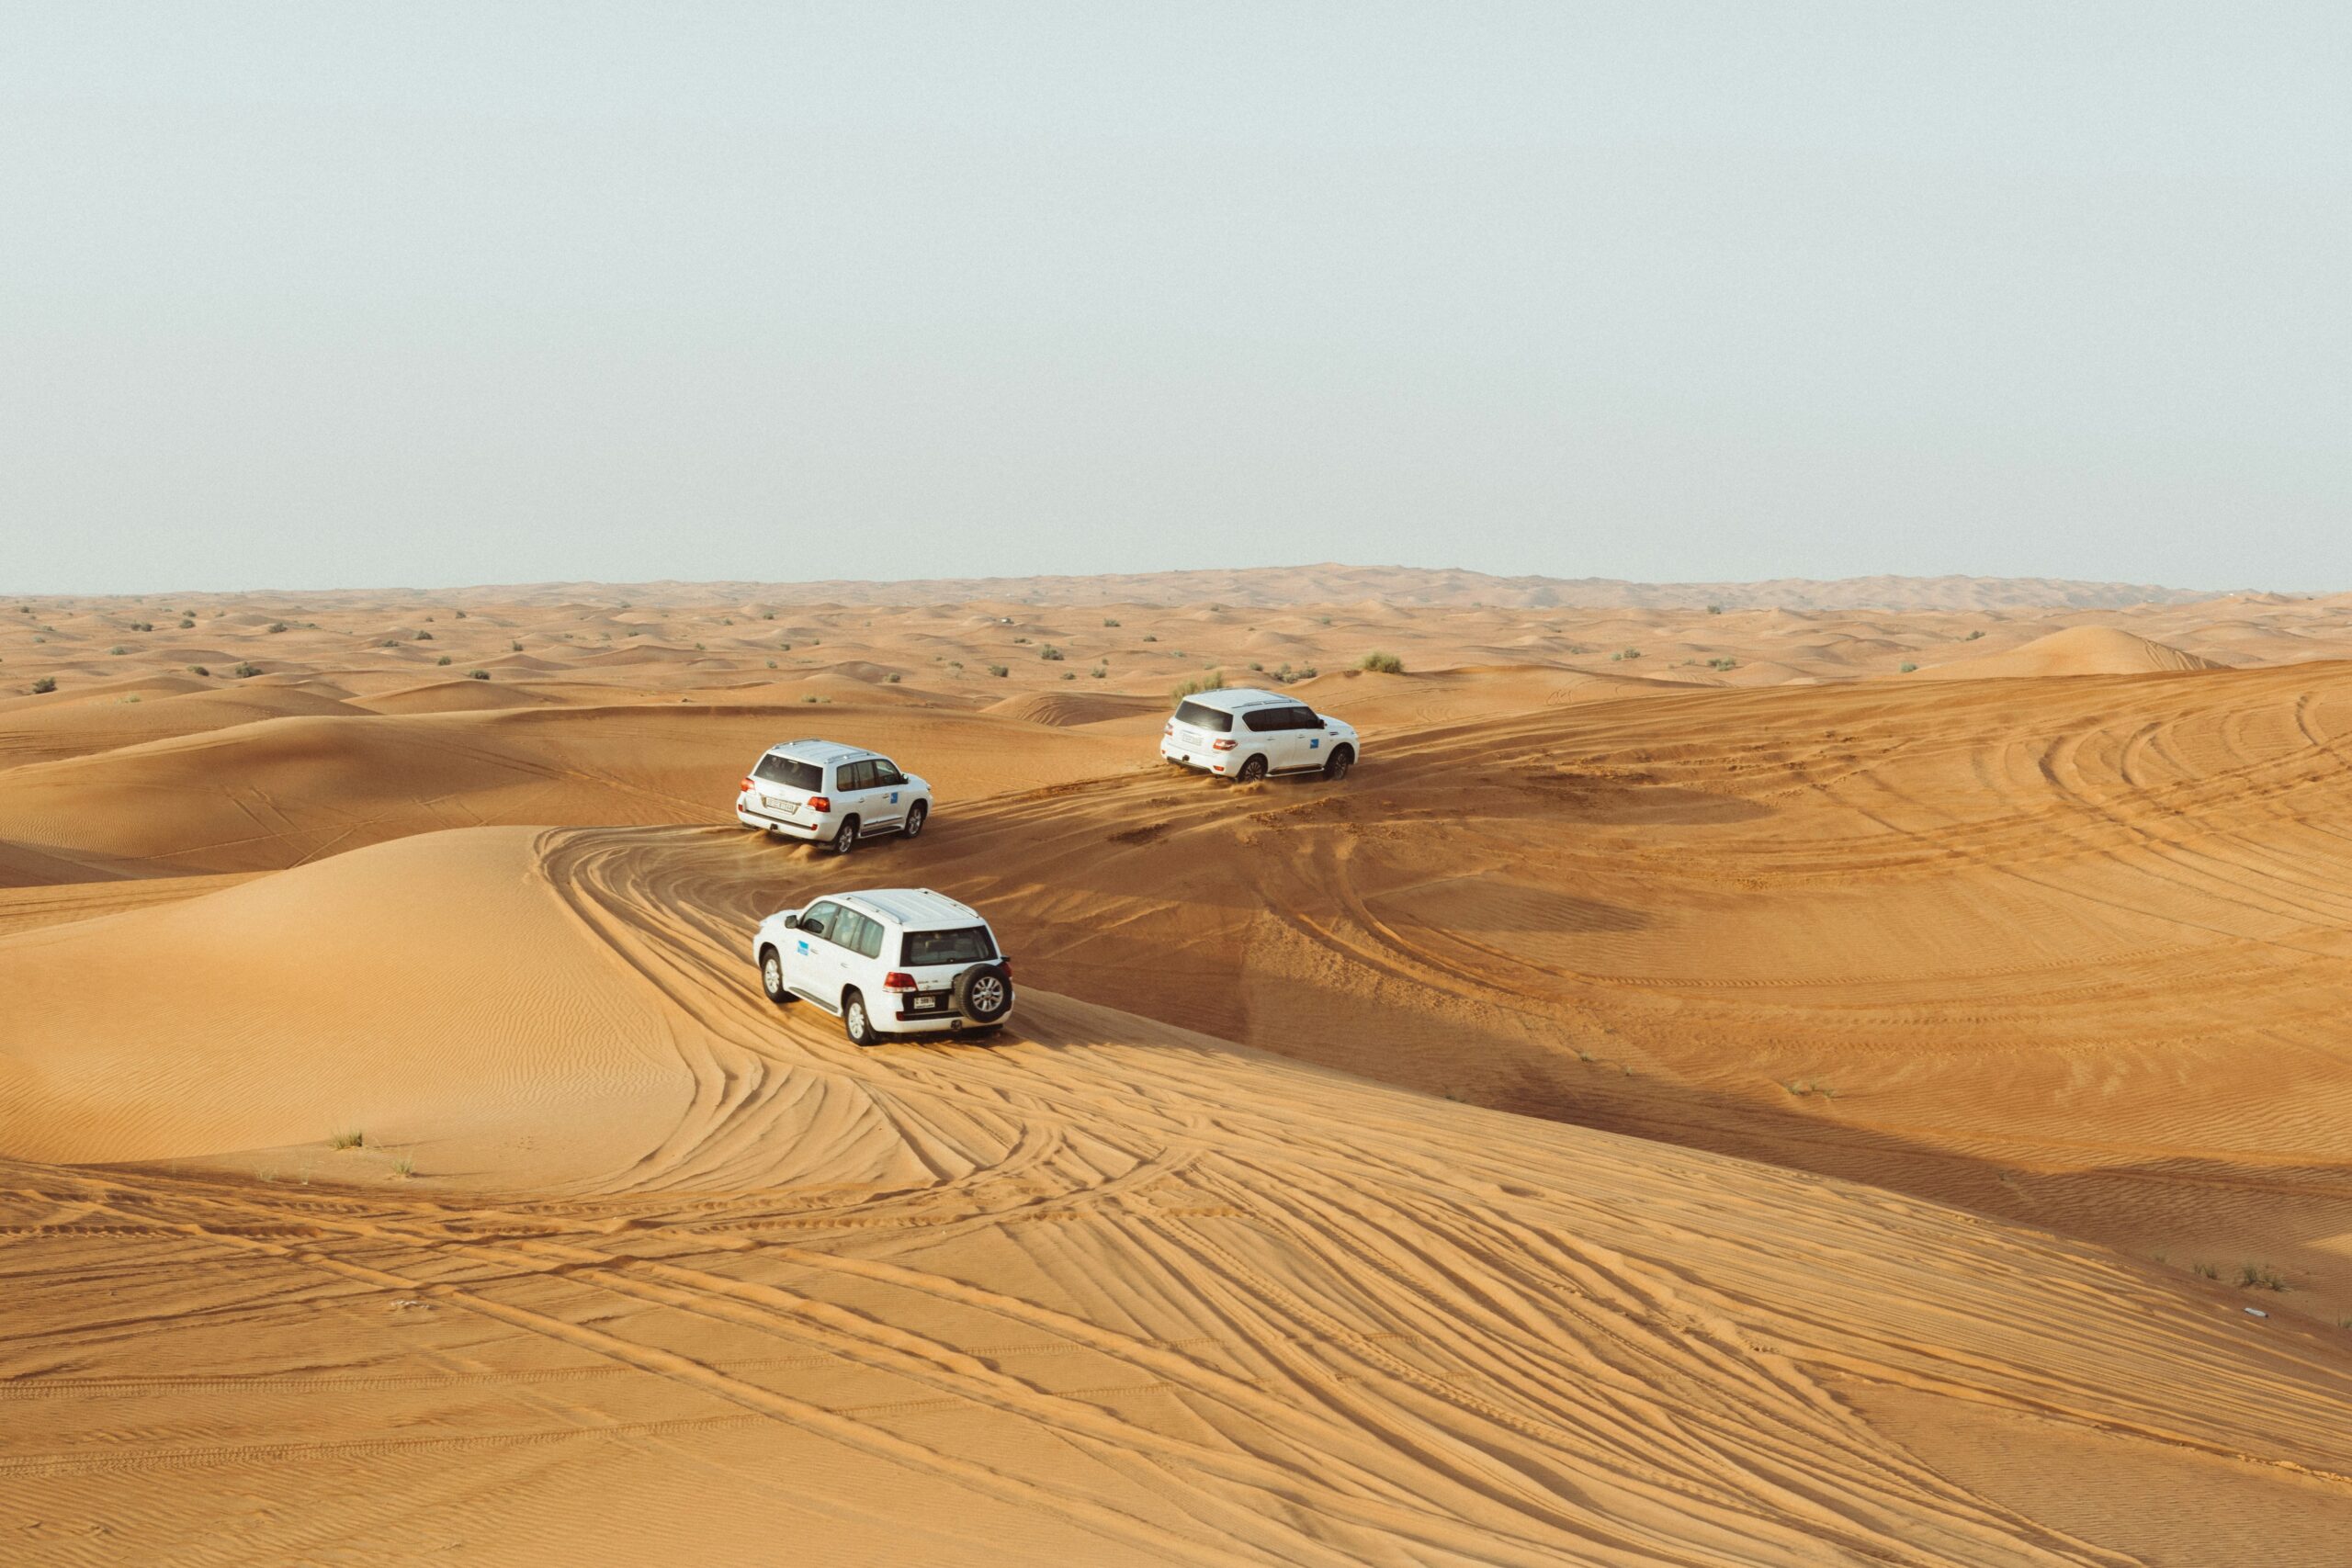 Three desert safari jeeps riding across the sand dunes